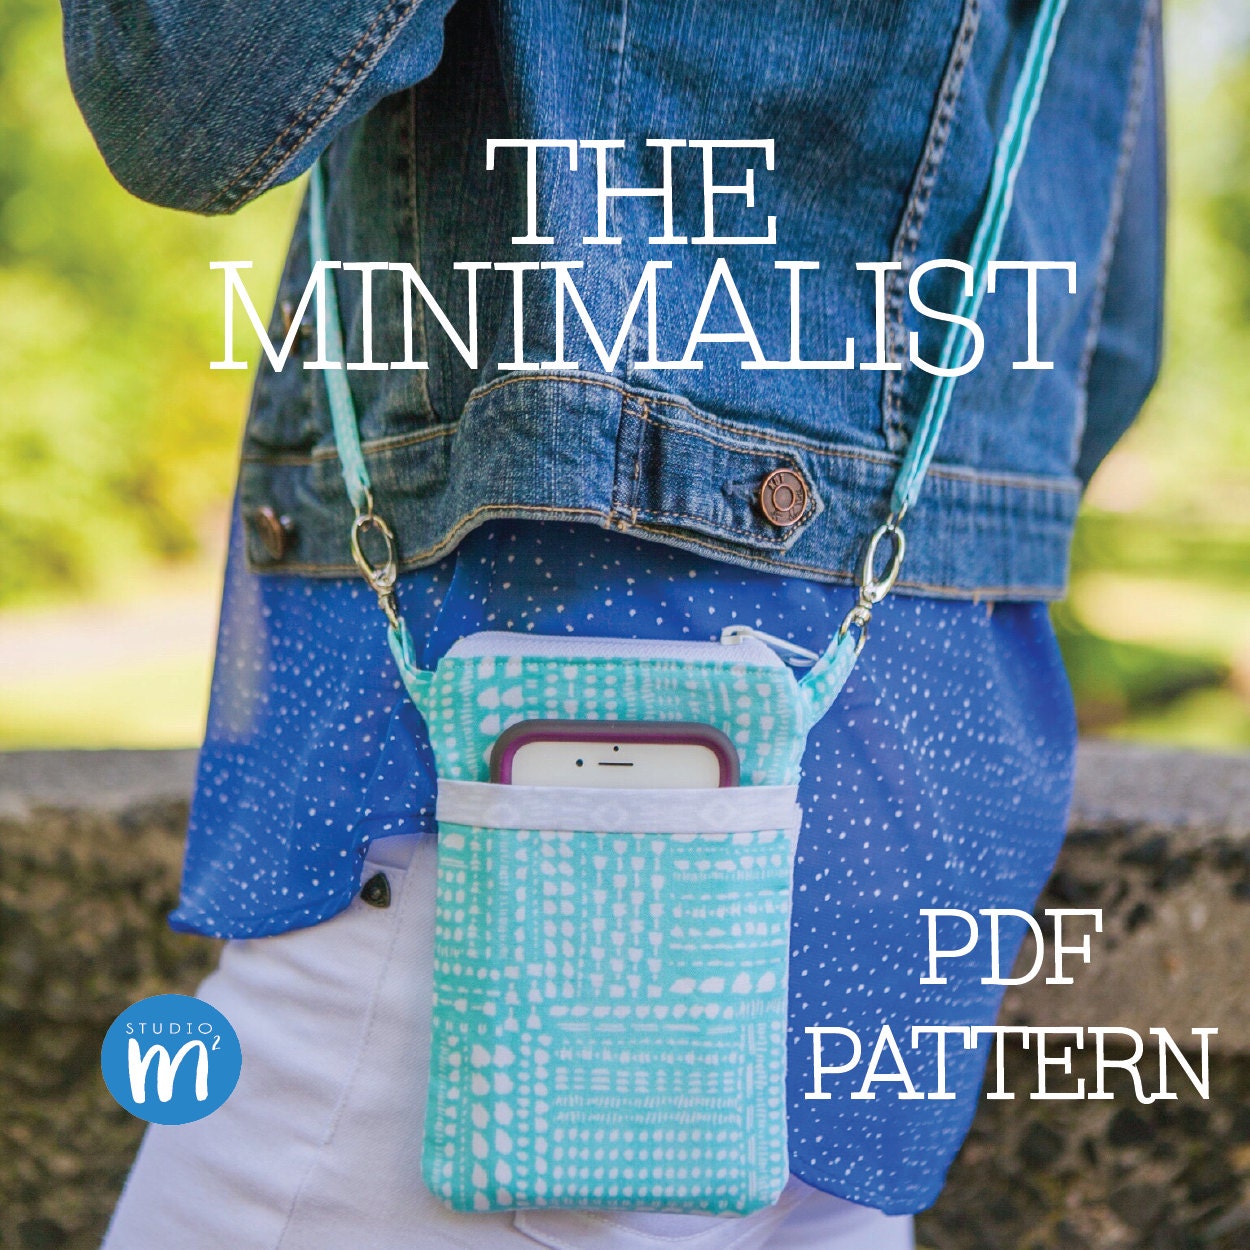 The Minimalist - PDF Pattern - Small Cross body Bag - Wristlet - Mini Messenger - Cell Phone ...